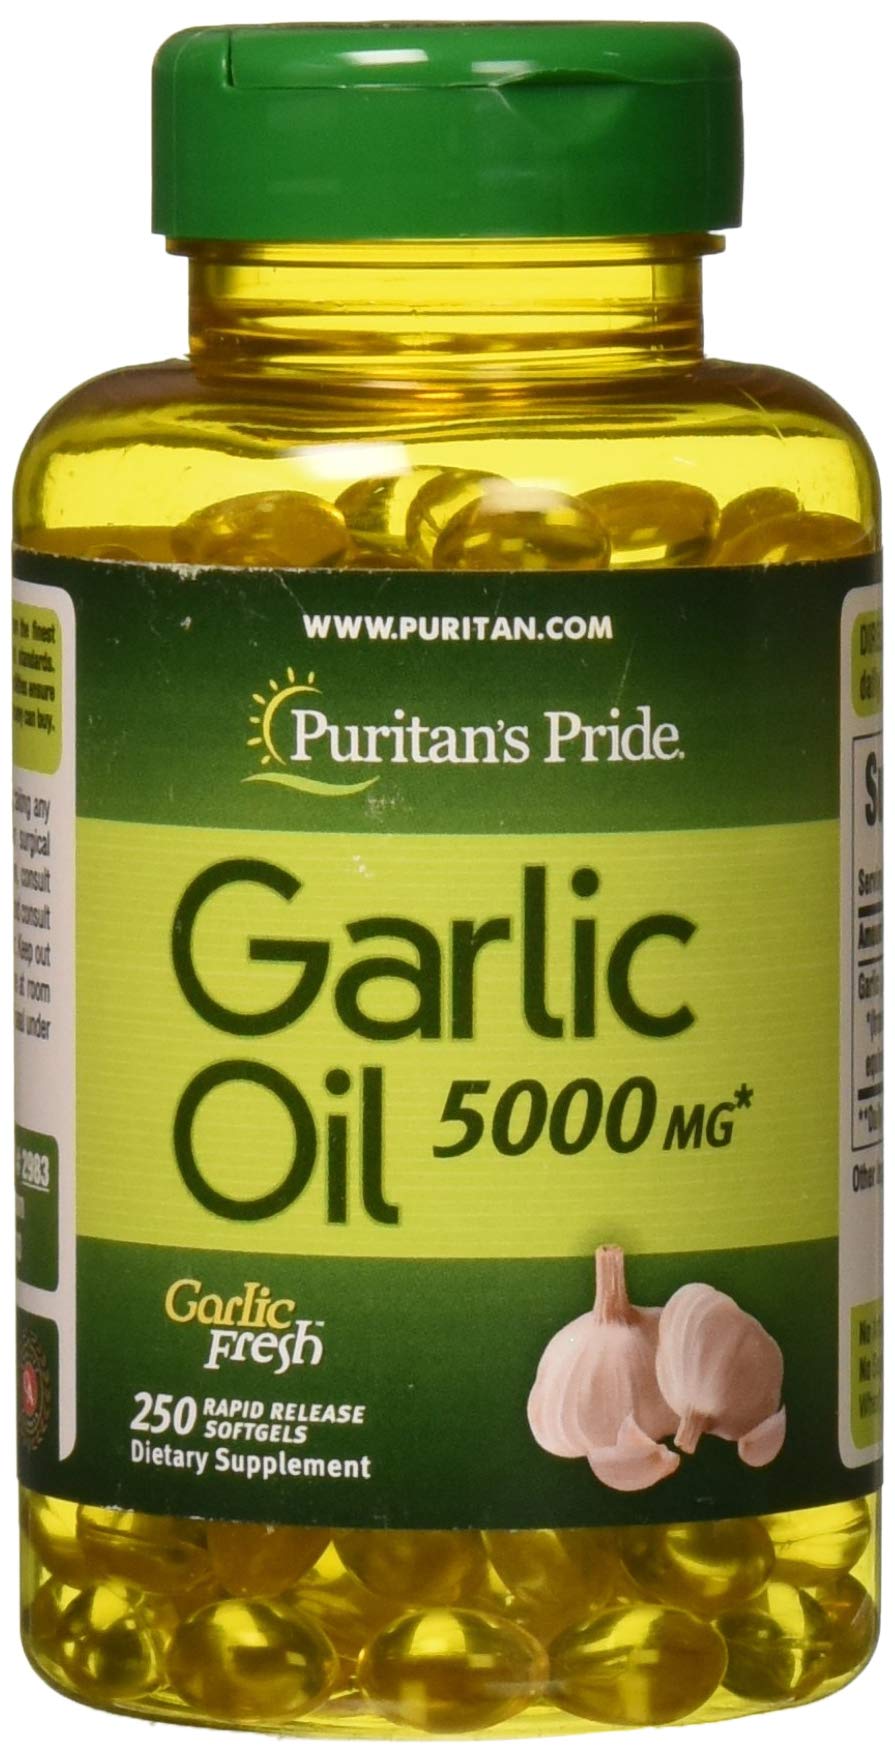 Puritans Pride Garlic Oil, 5000 Mg, 250 Count $4.77 at Amazon